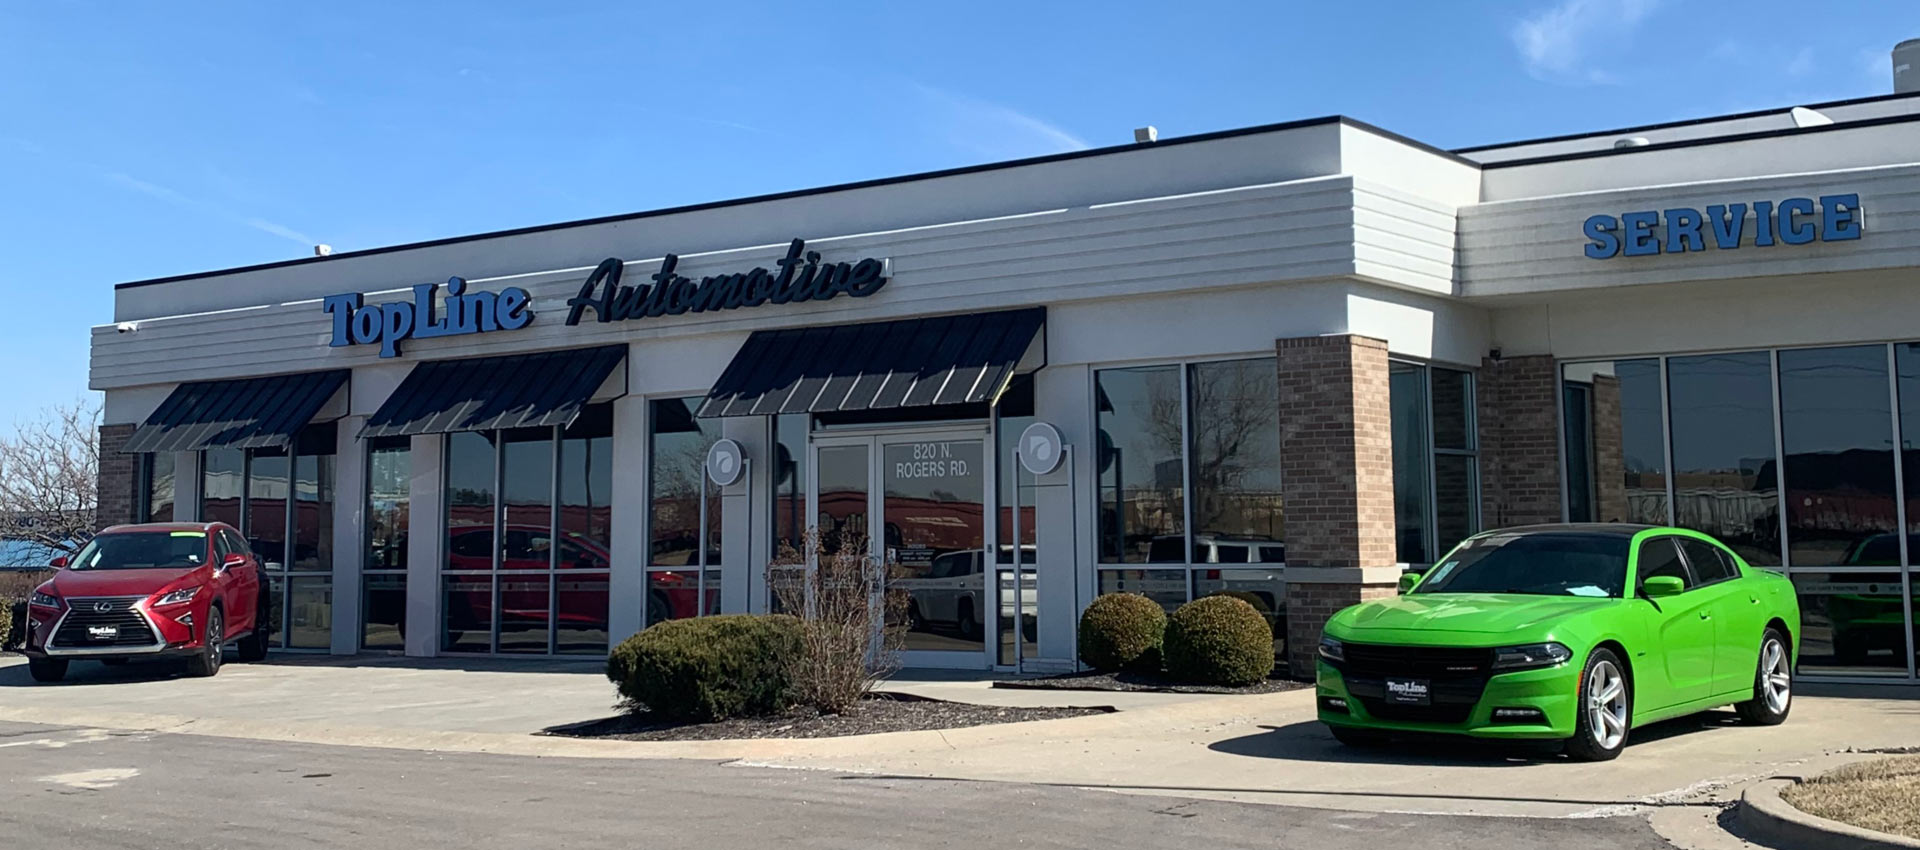 TopLine Automotive Storefront